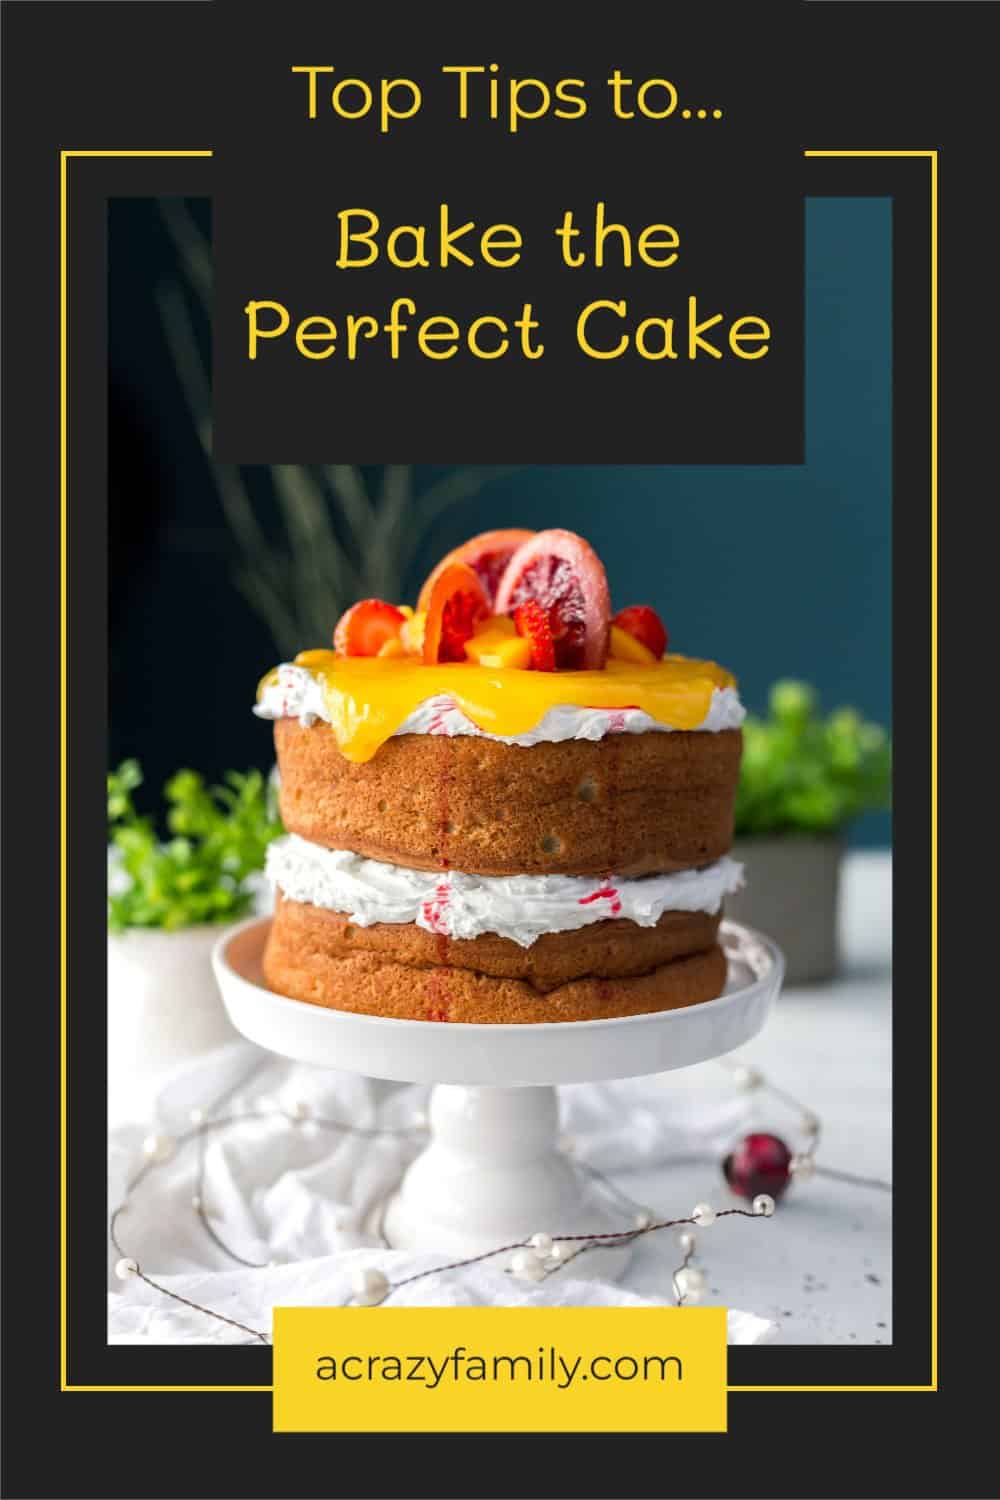 Bake the Perfect Cake 5